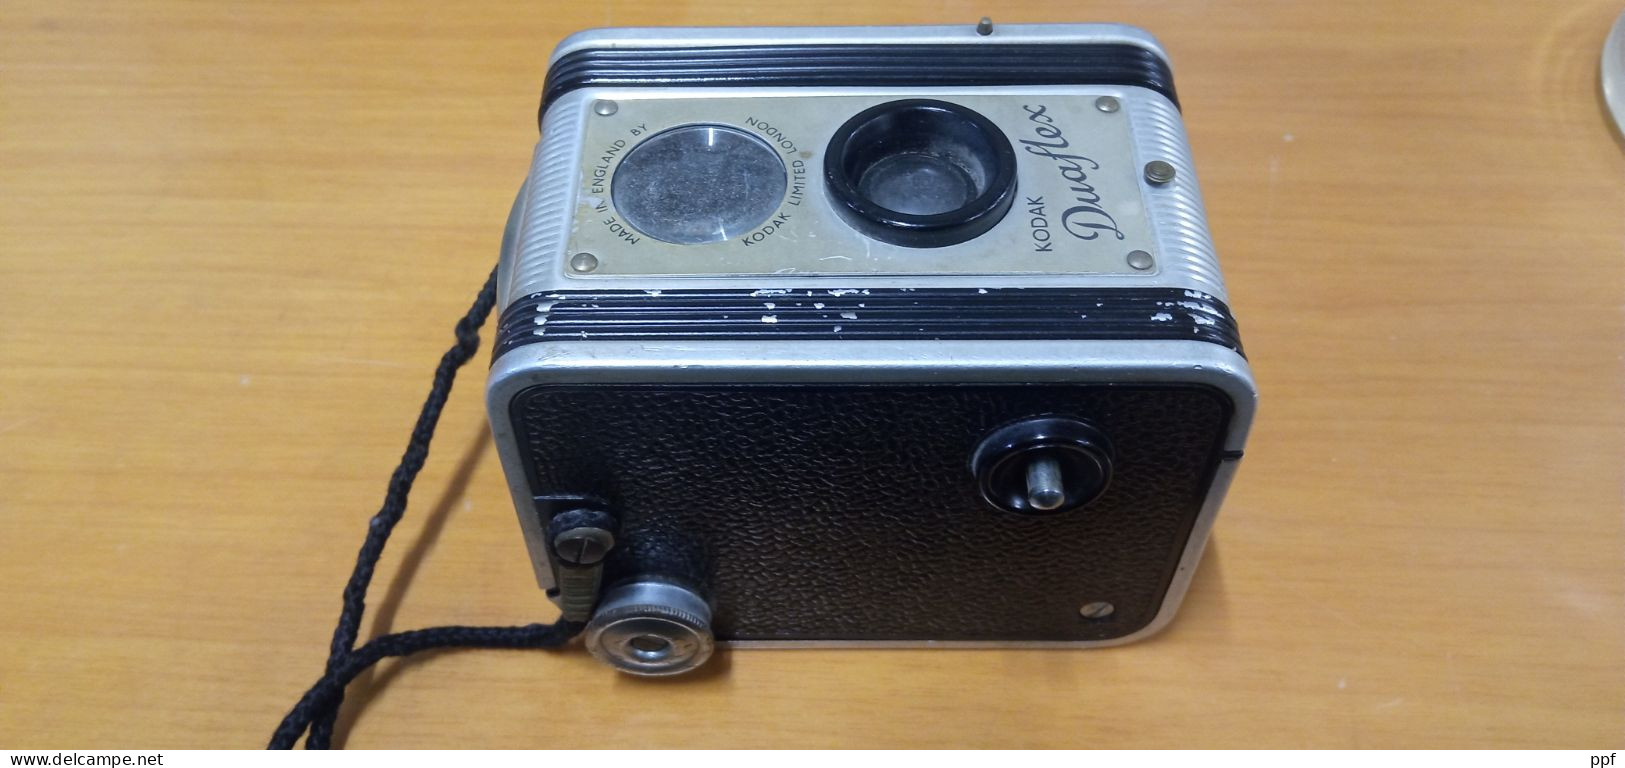 Kodak Duaflex Kodak Limited London, Da Collezione, Vintage - Cameras